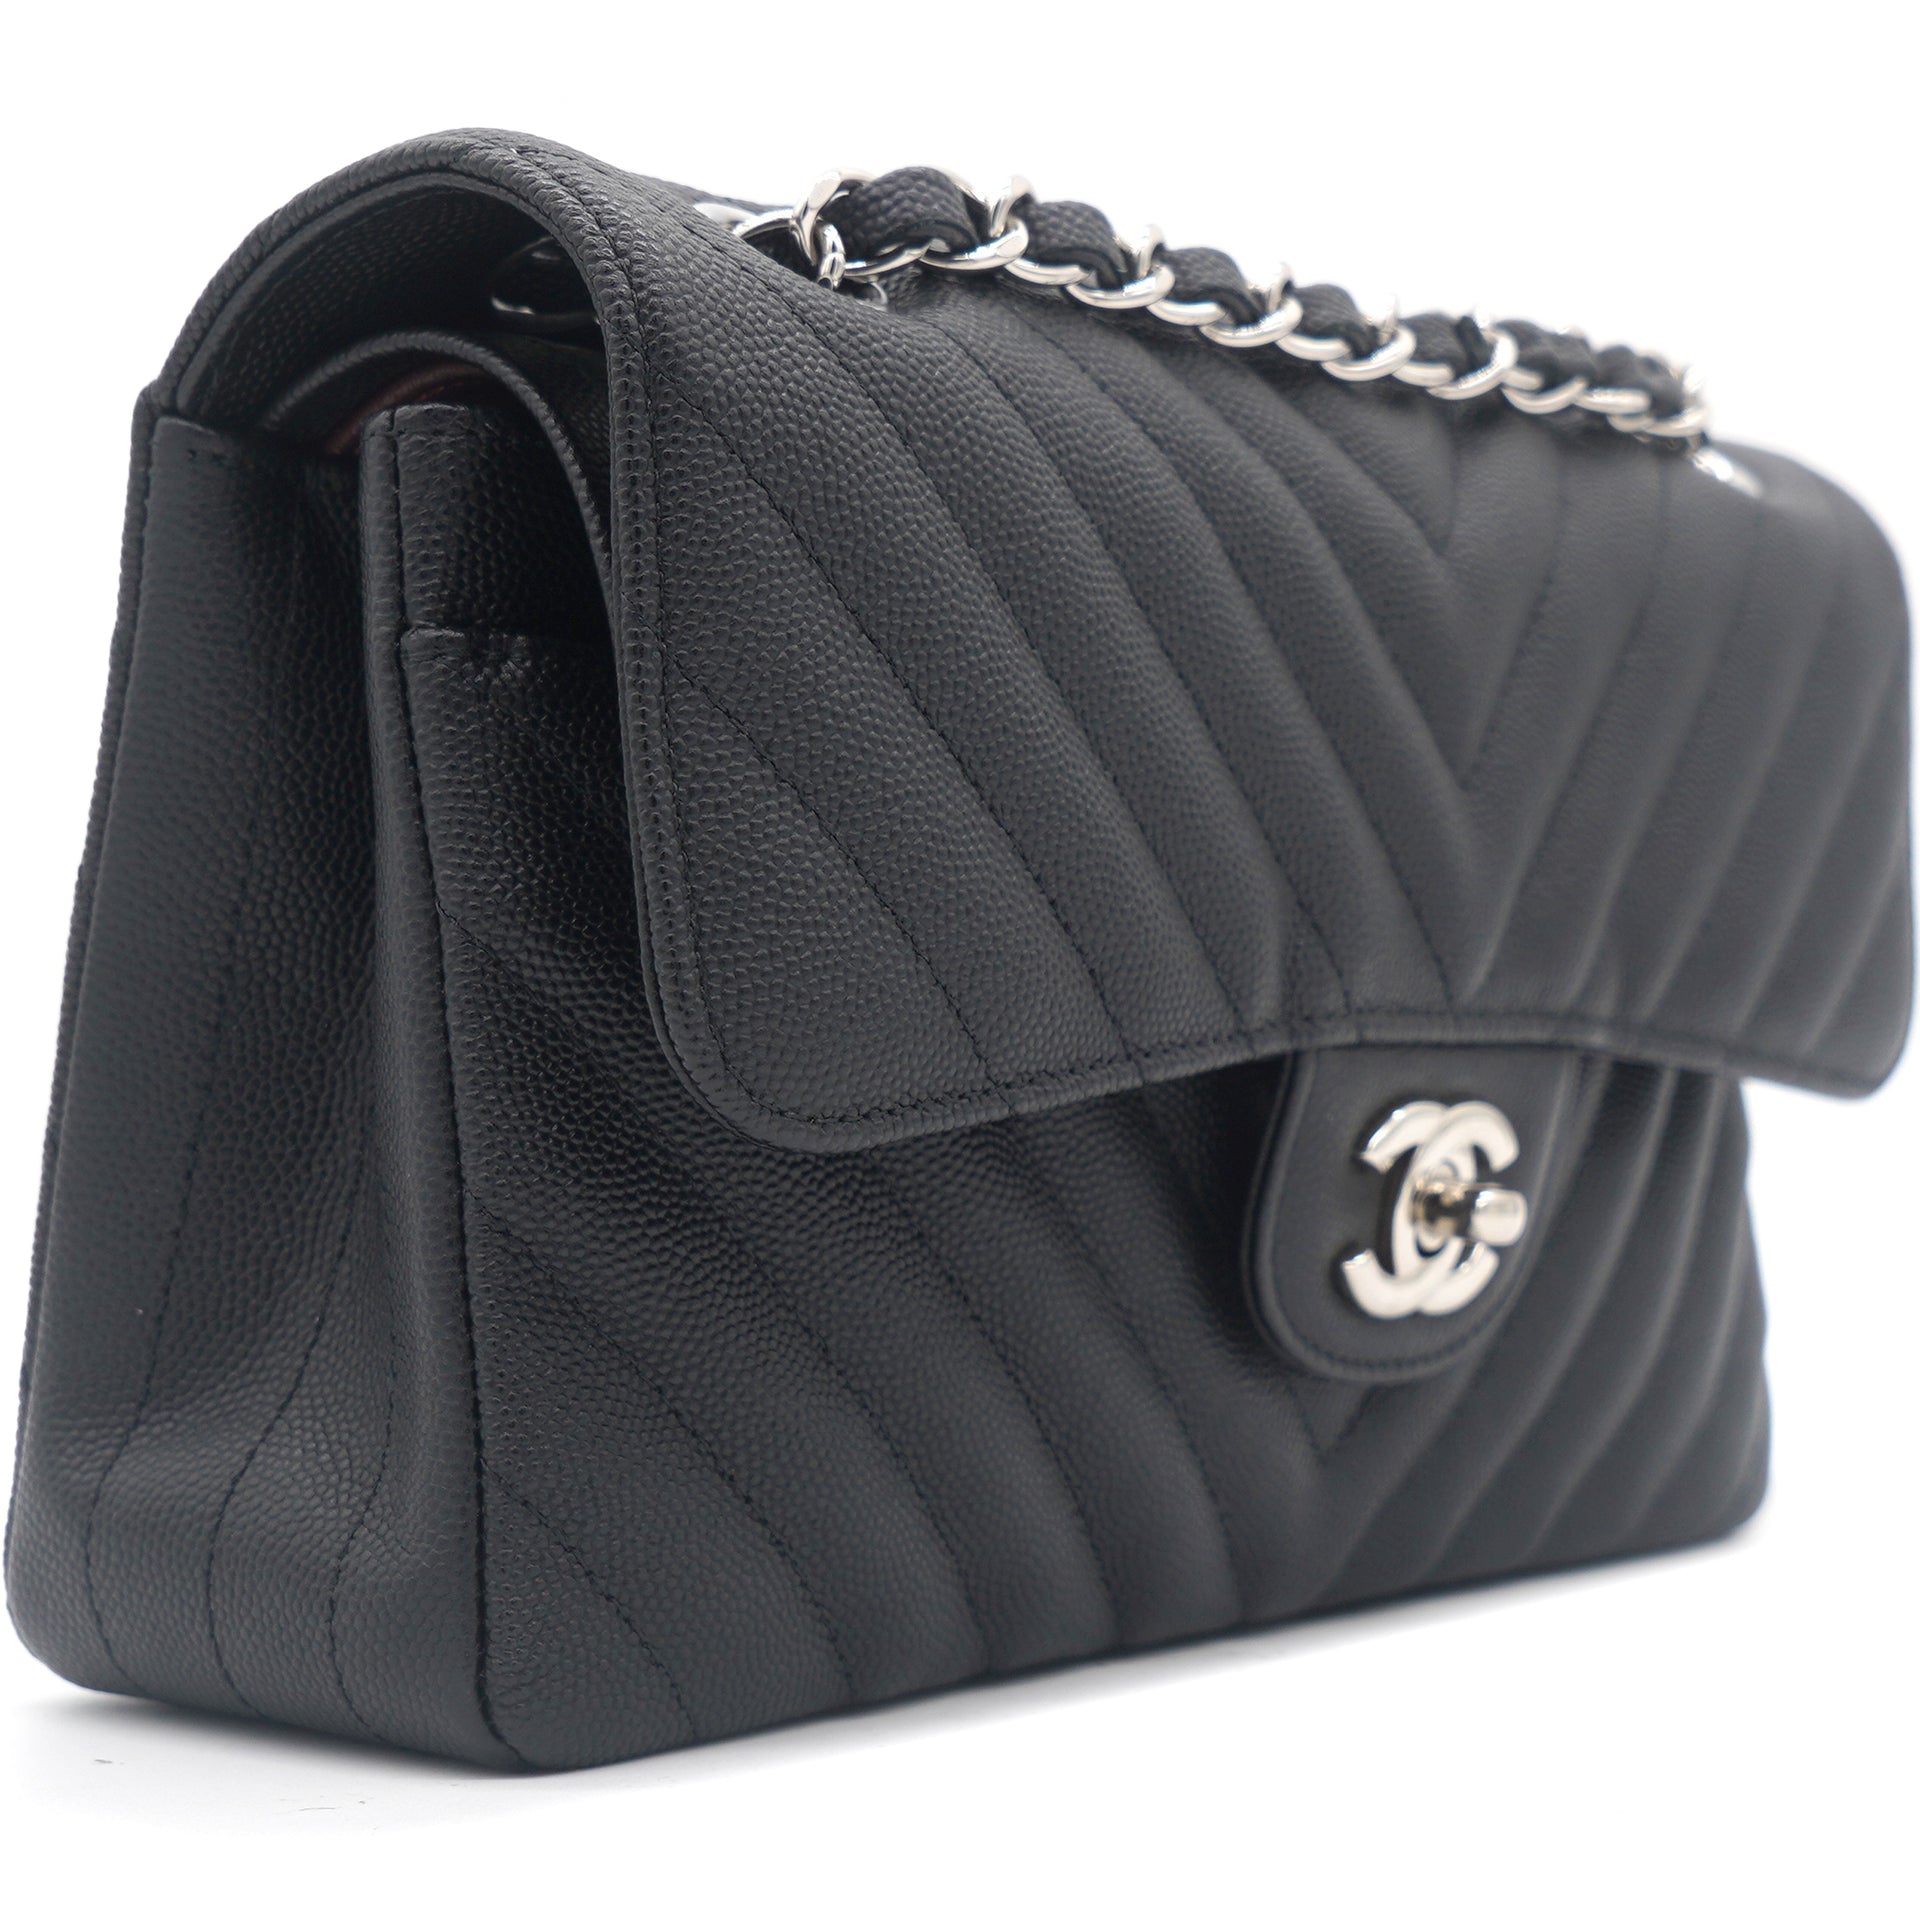 Chanel Silver Chevron Quilted Metallic Caviar Square Mini Flap Bag